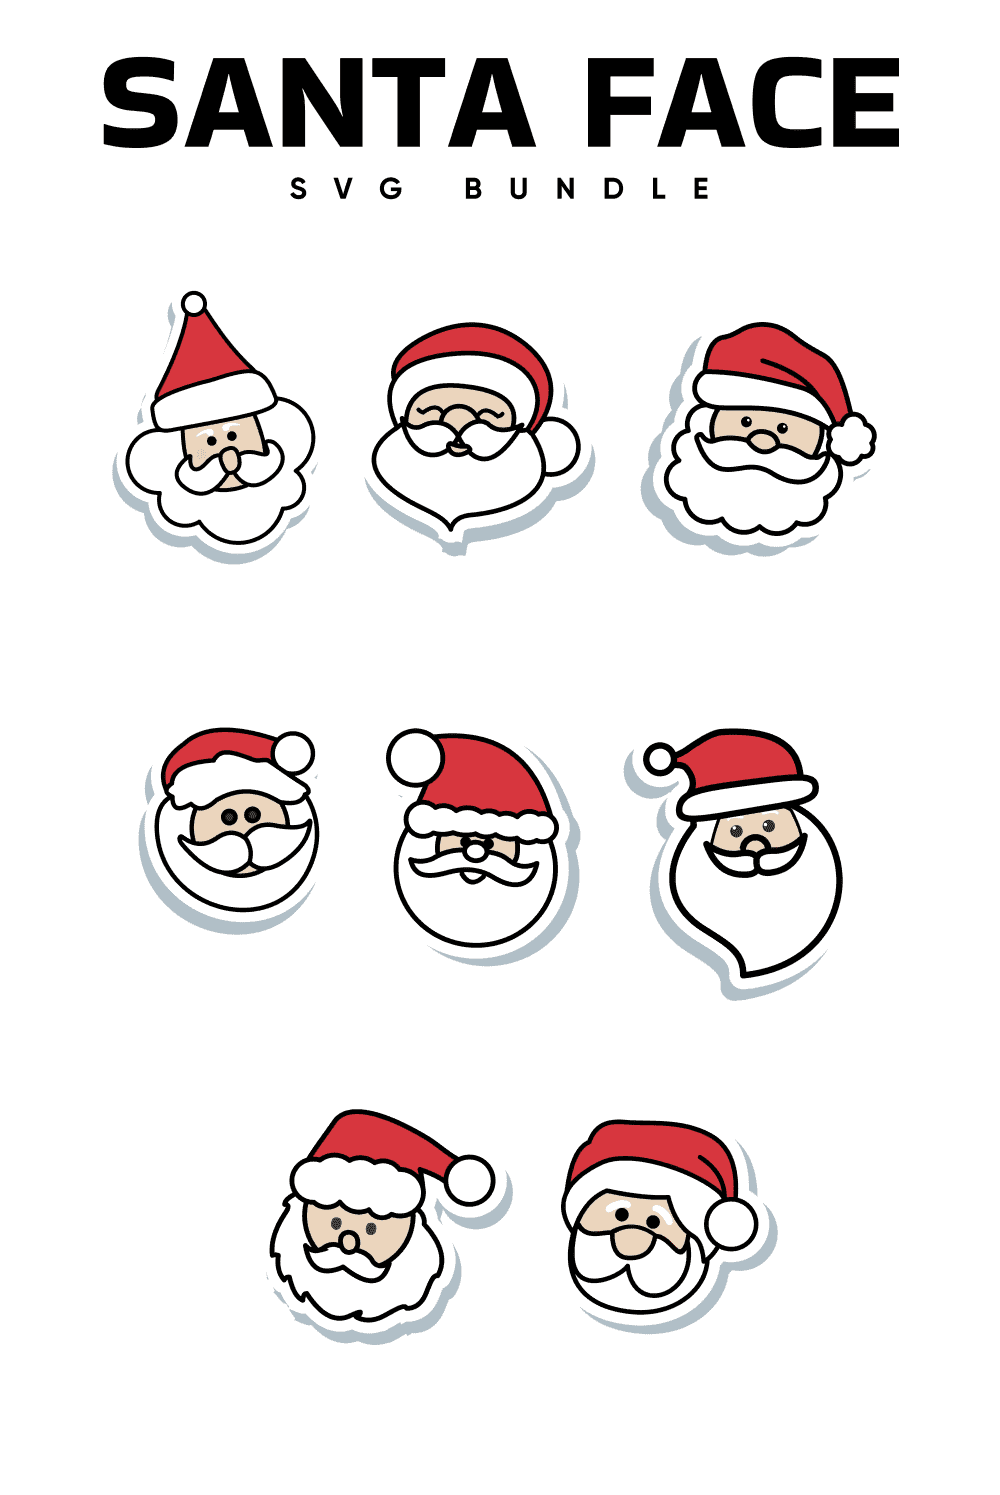 Santa face svg bundle.